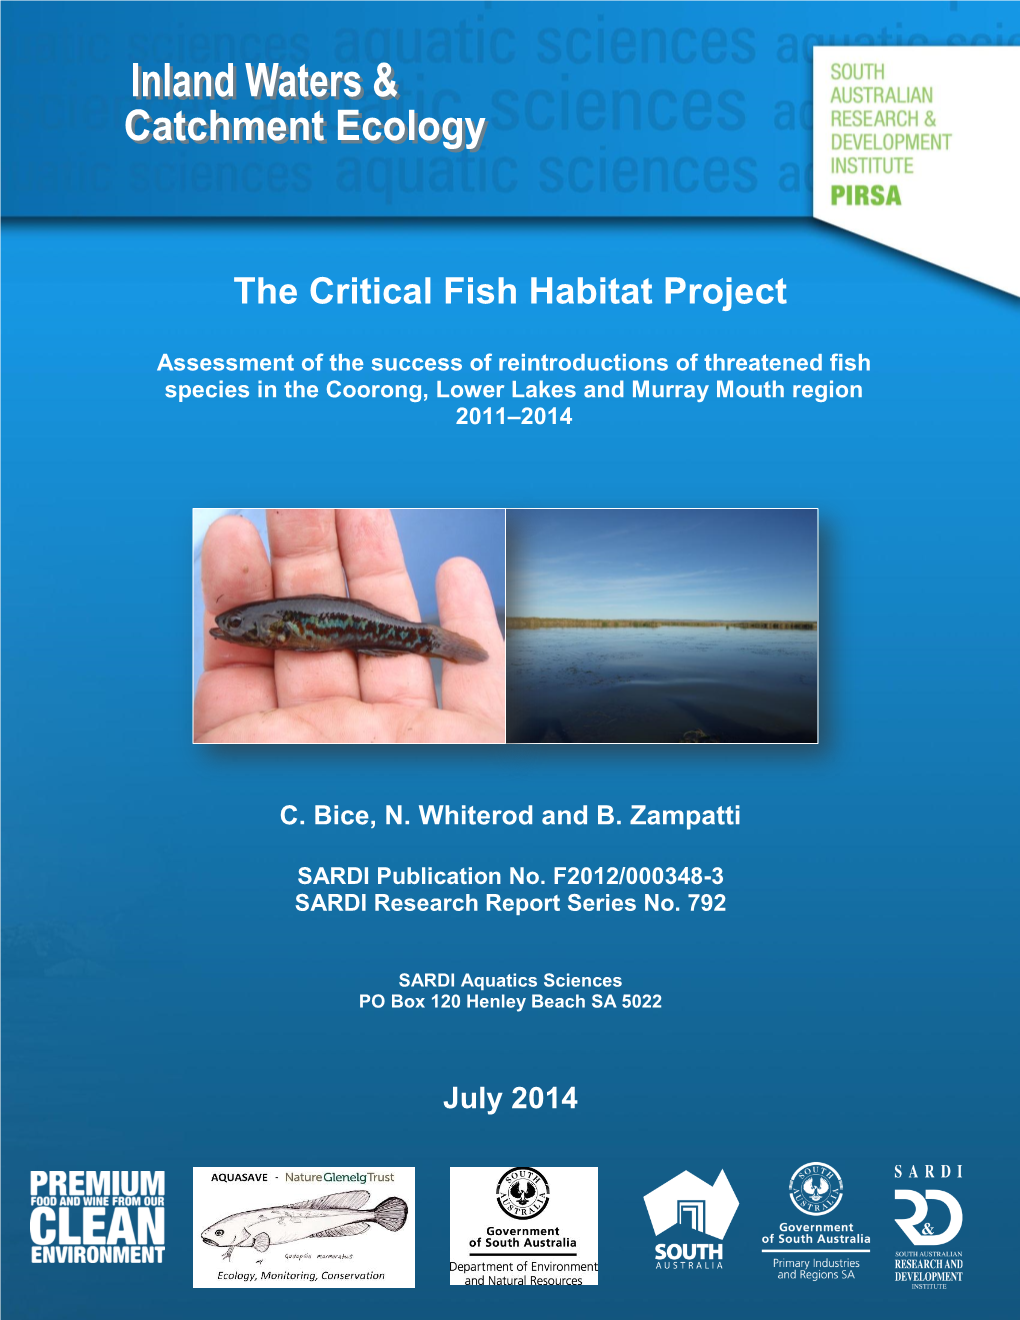 The Critical Fish Habitat Project